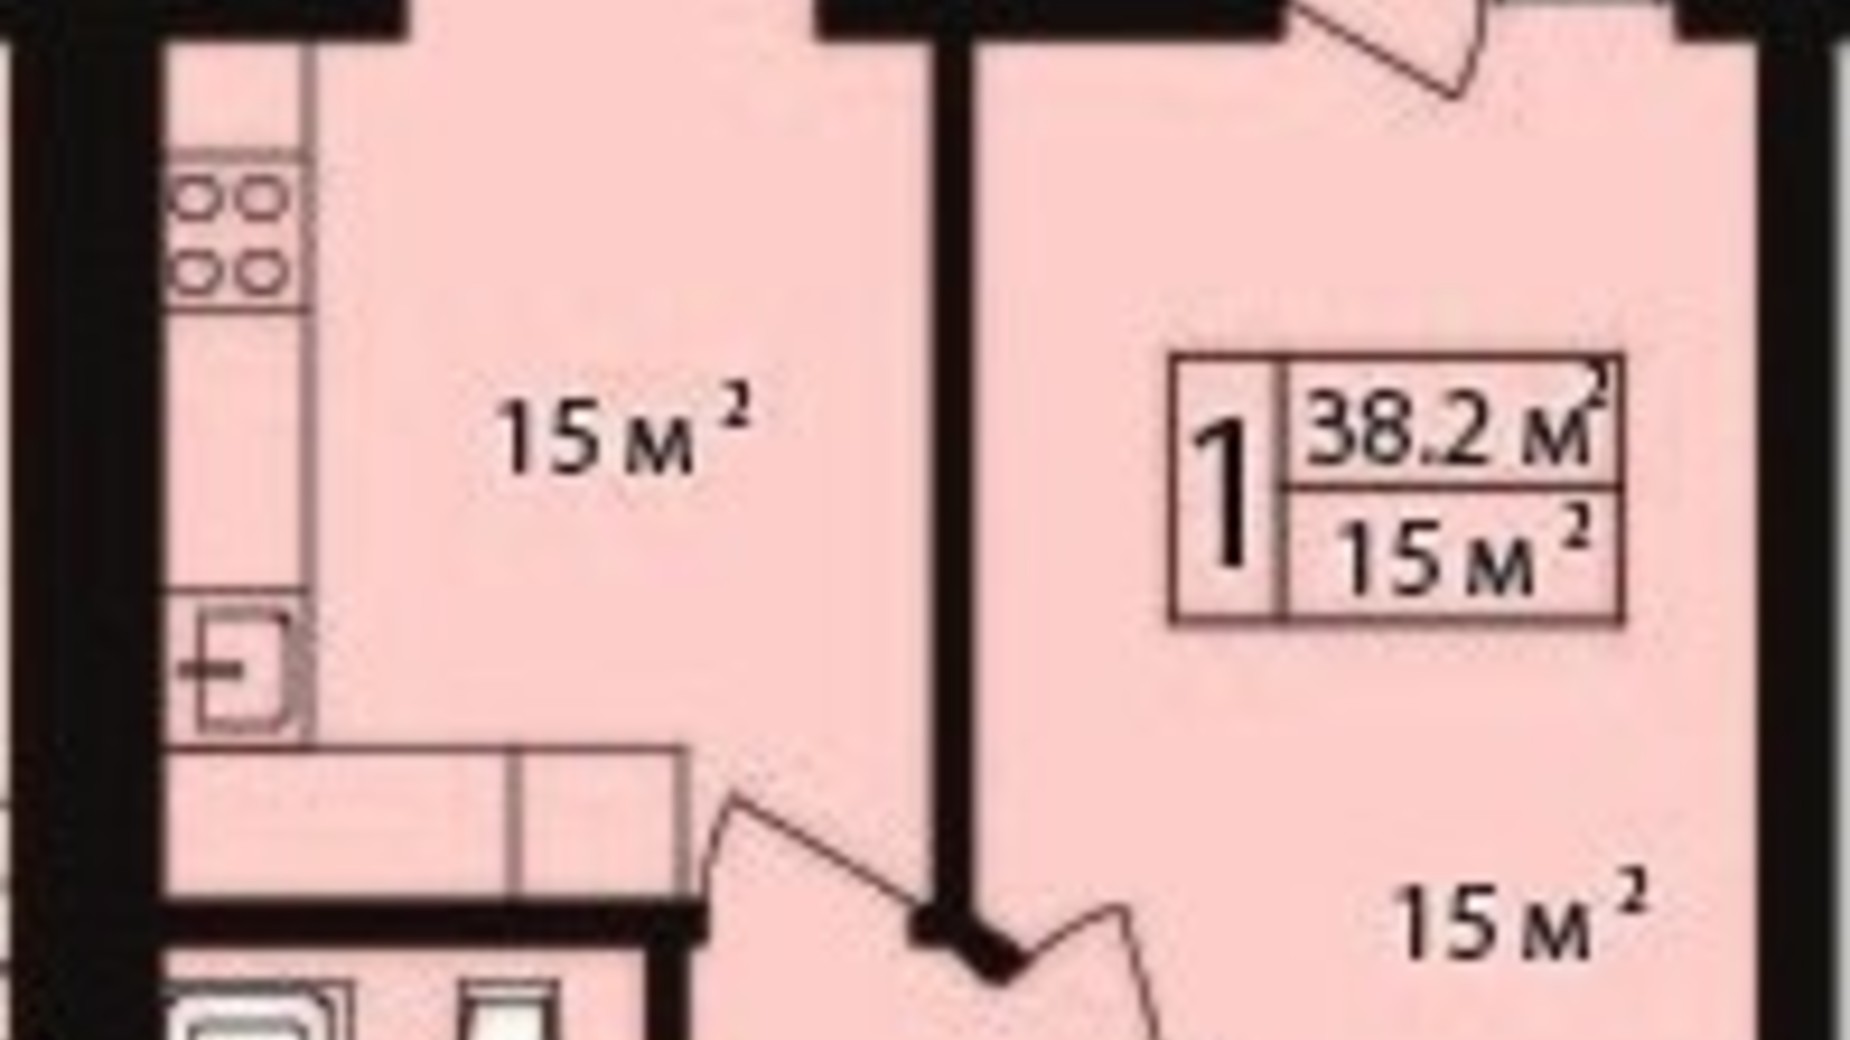 Планування 1-кімнатної квартири в ЖК Dream Park 38.2 м², фото 661295